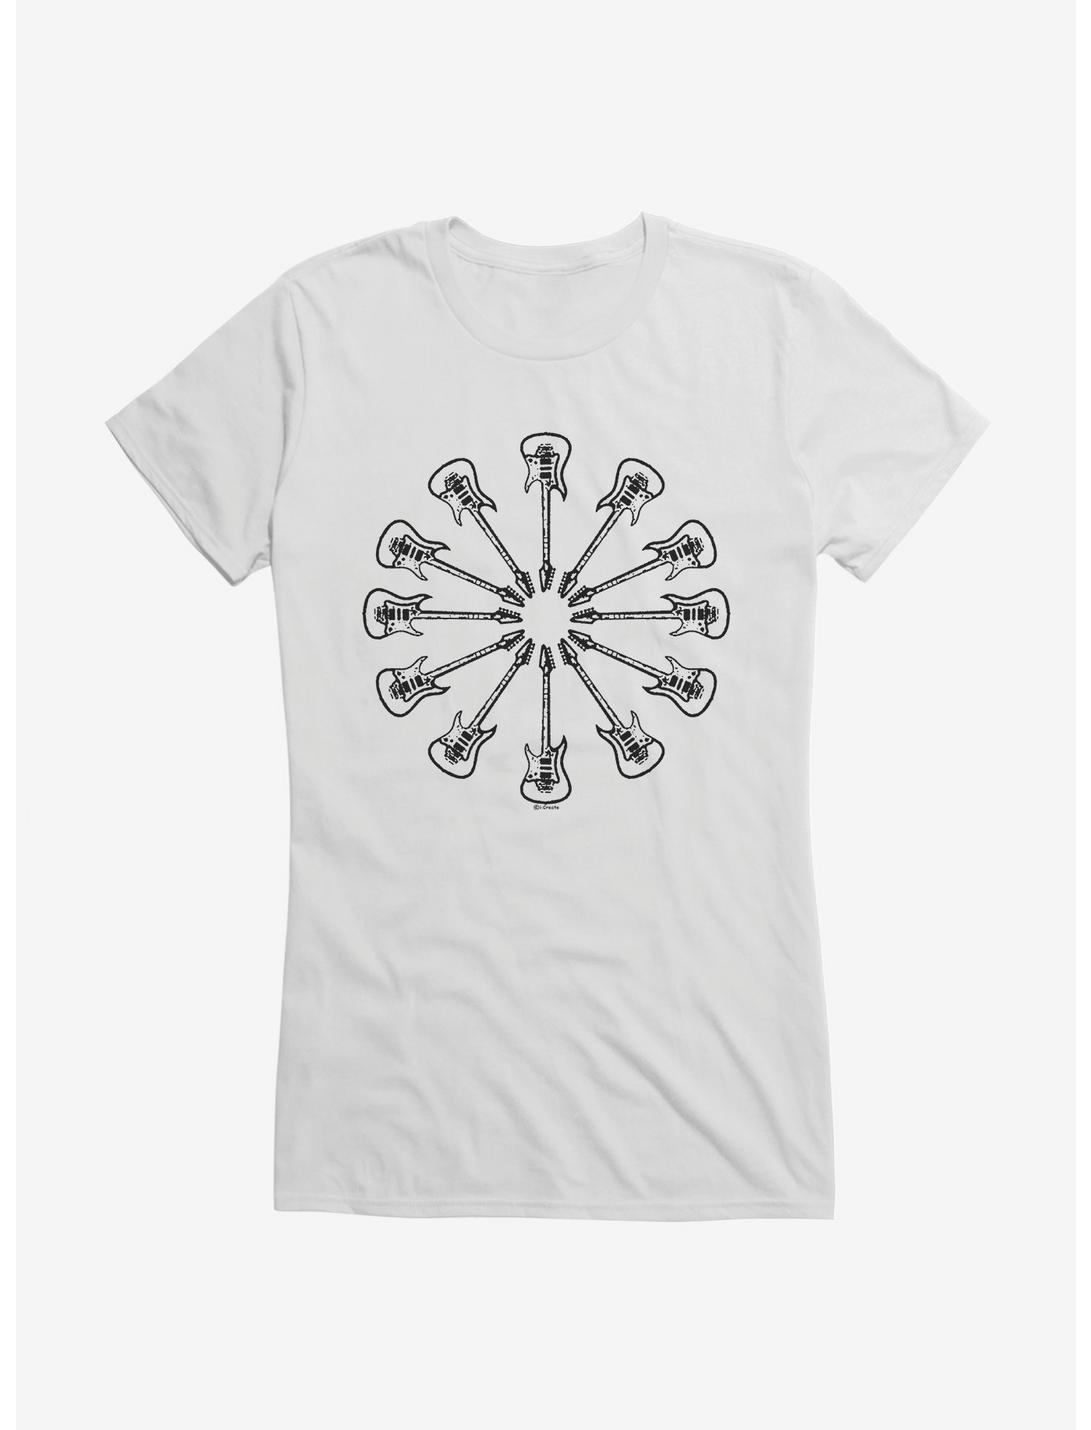 iCreate Black And White Guitar Wheel Girls T-Shirt, , hi-res